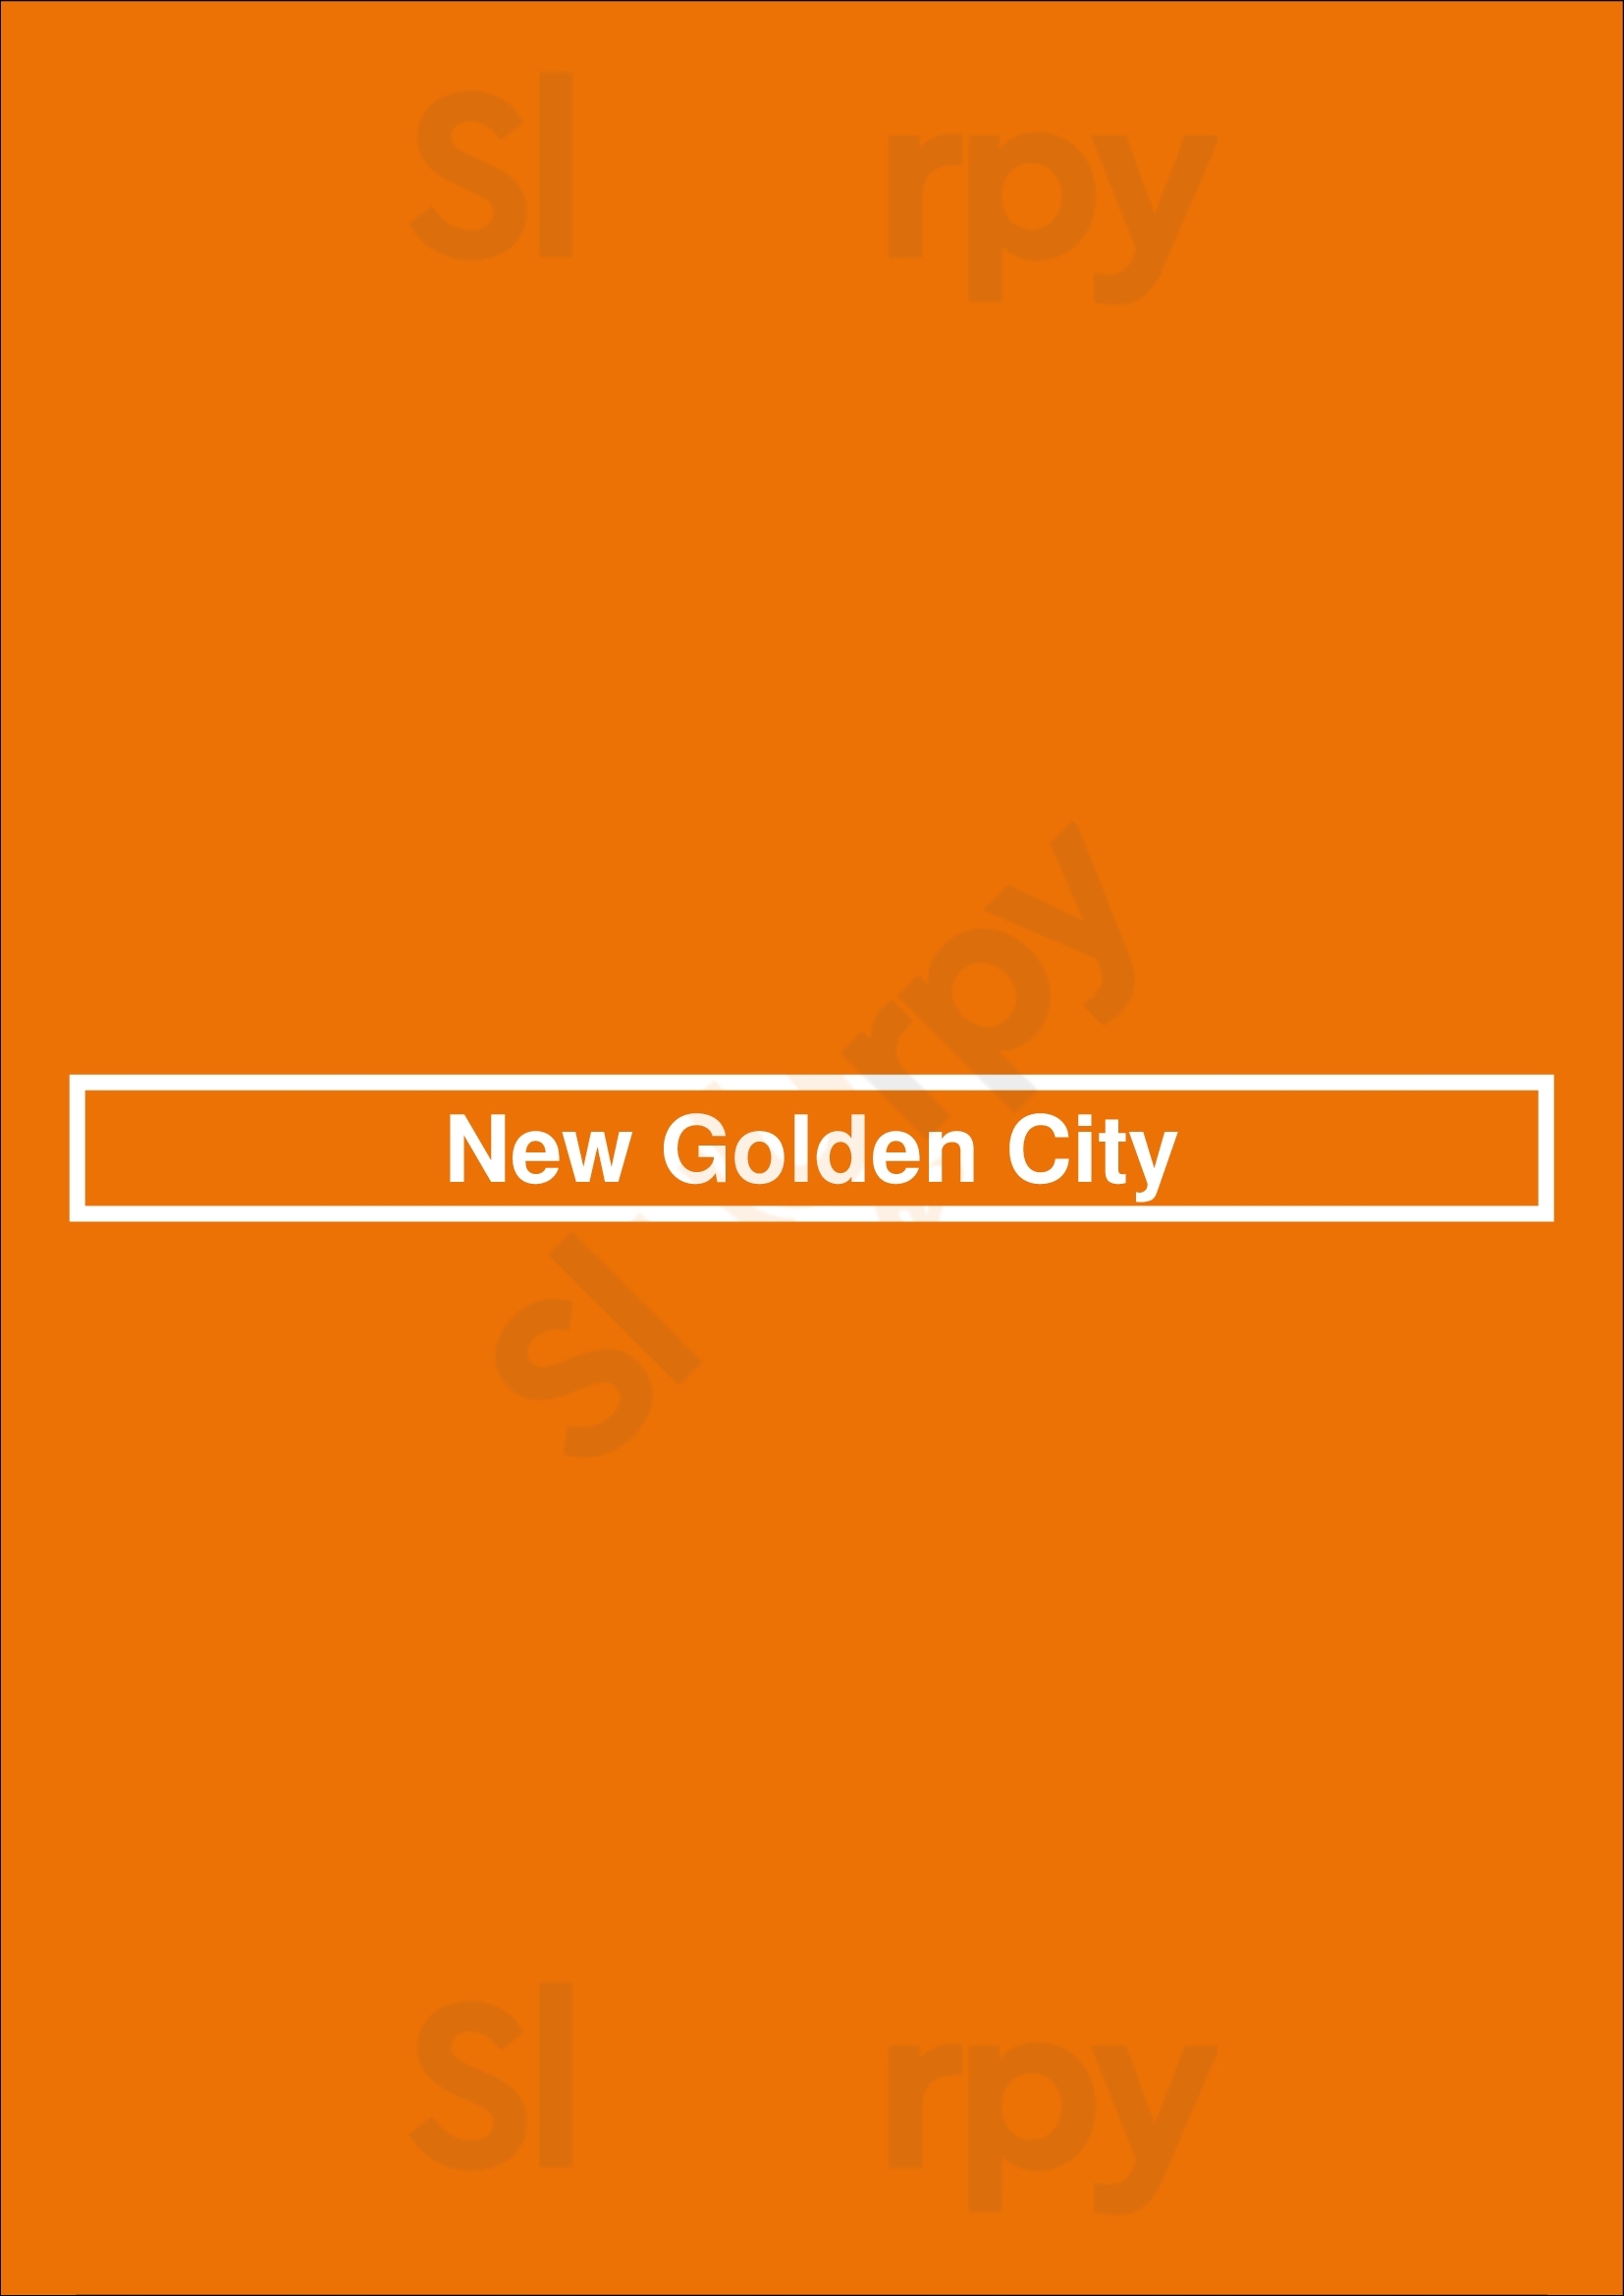 New Golden City London Menu - 1